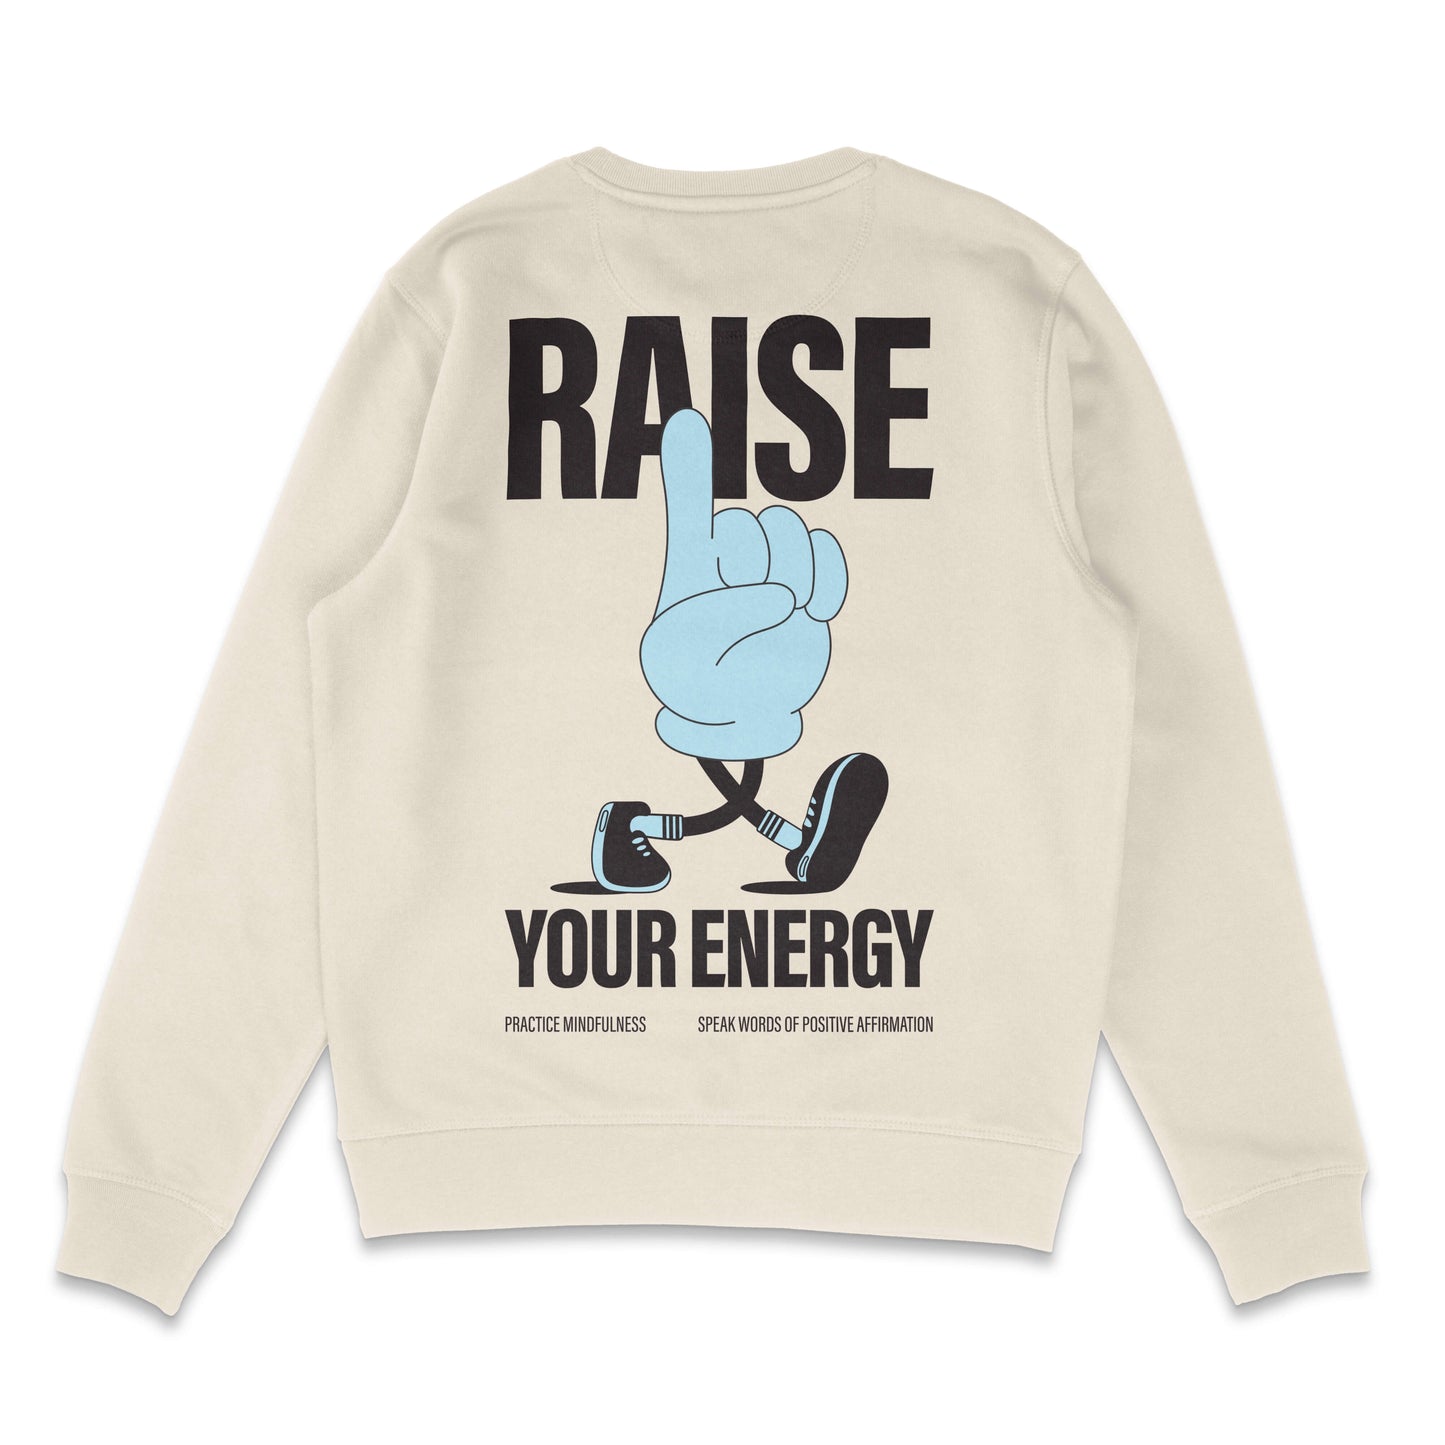 Raise your energy sweater, good energy unisex jumper crewneck